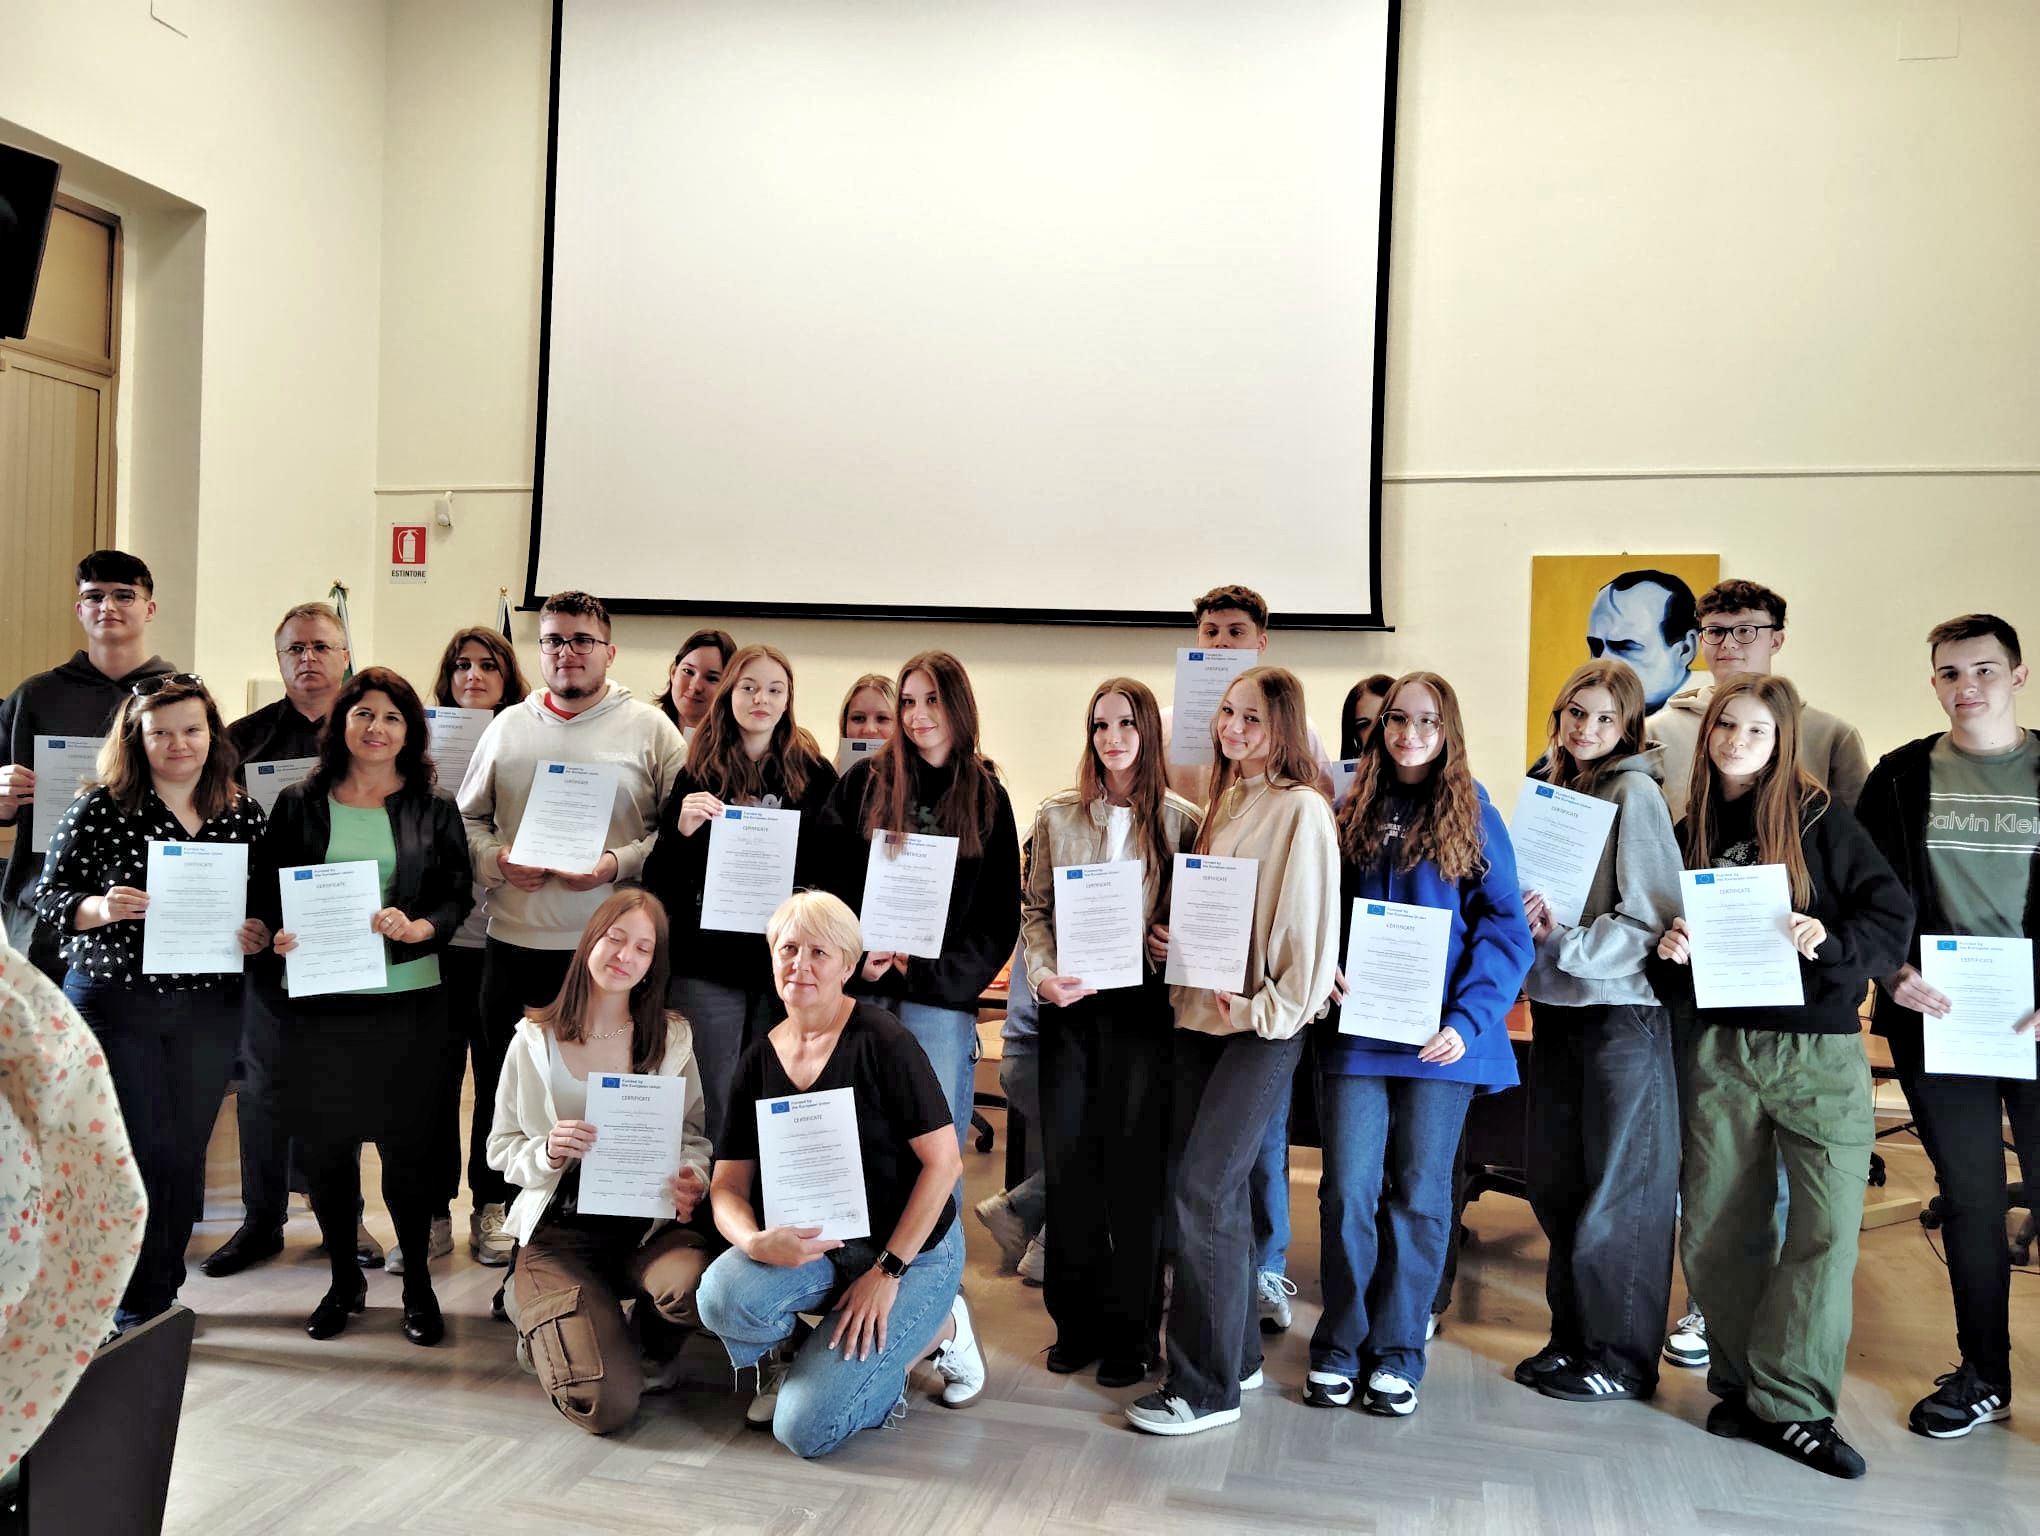 Caltanissetta. All’Istituto “Manzoni – Juvara” progetto Erasmus per 18 studenti polacchi